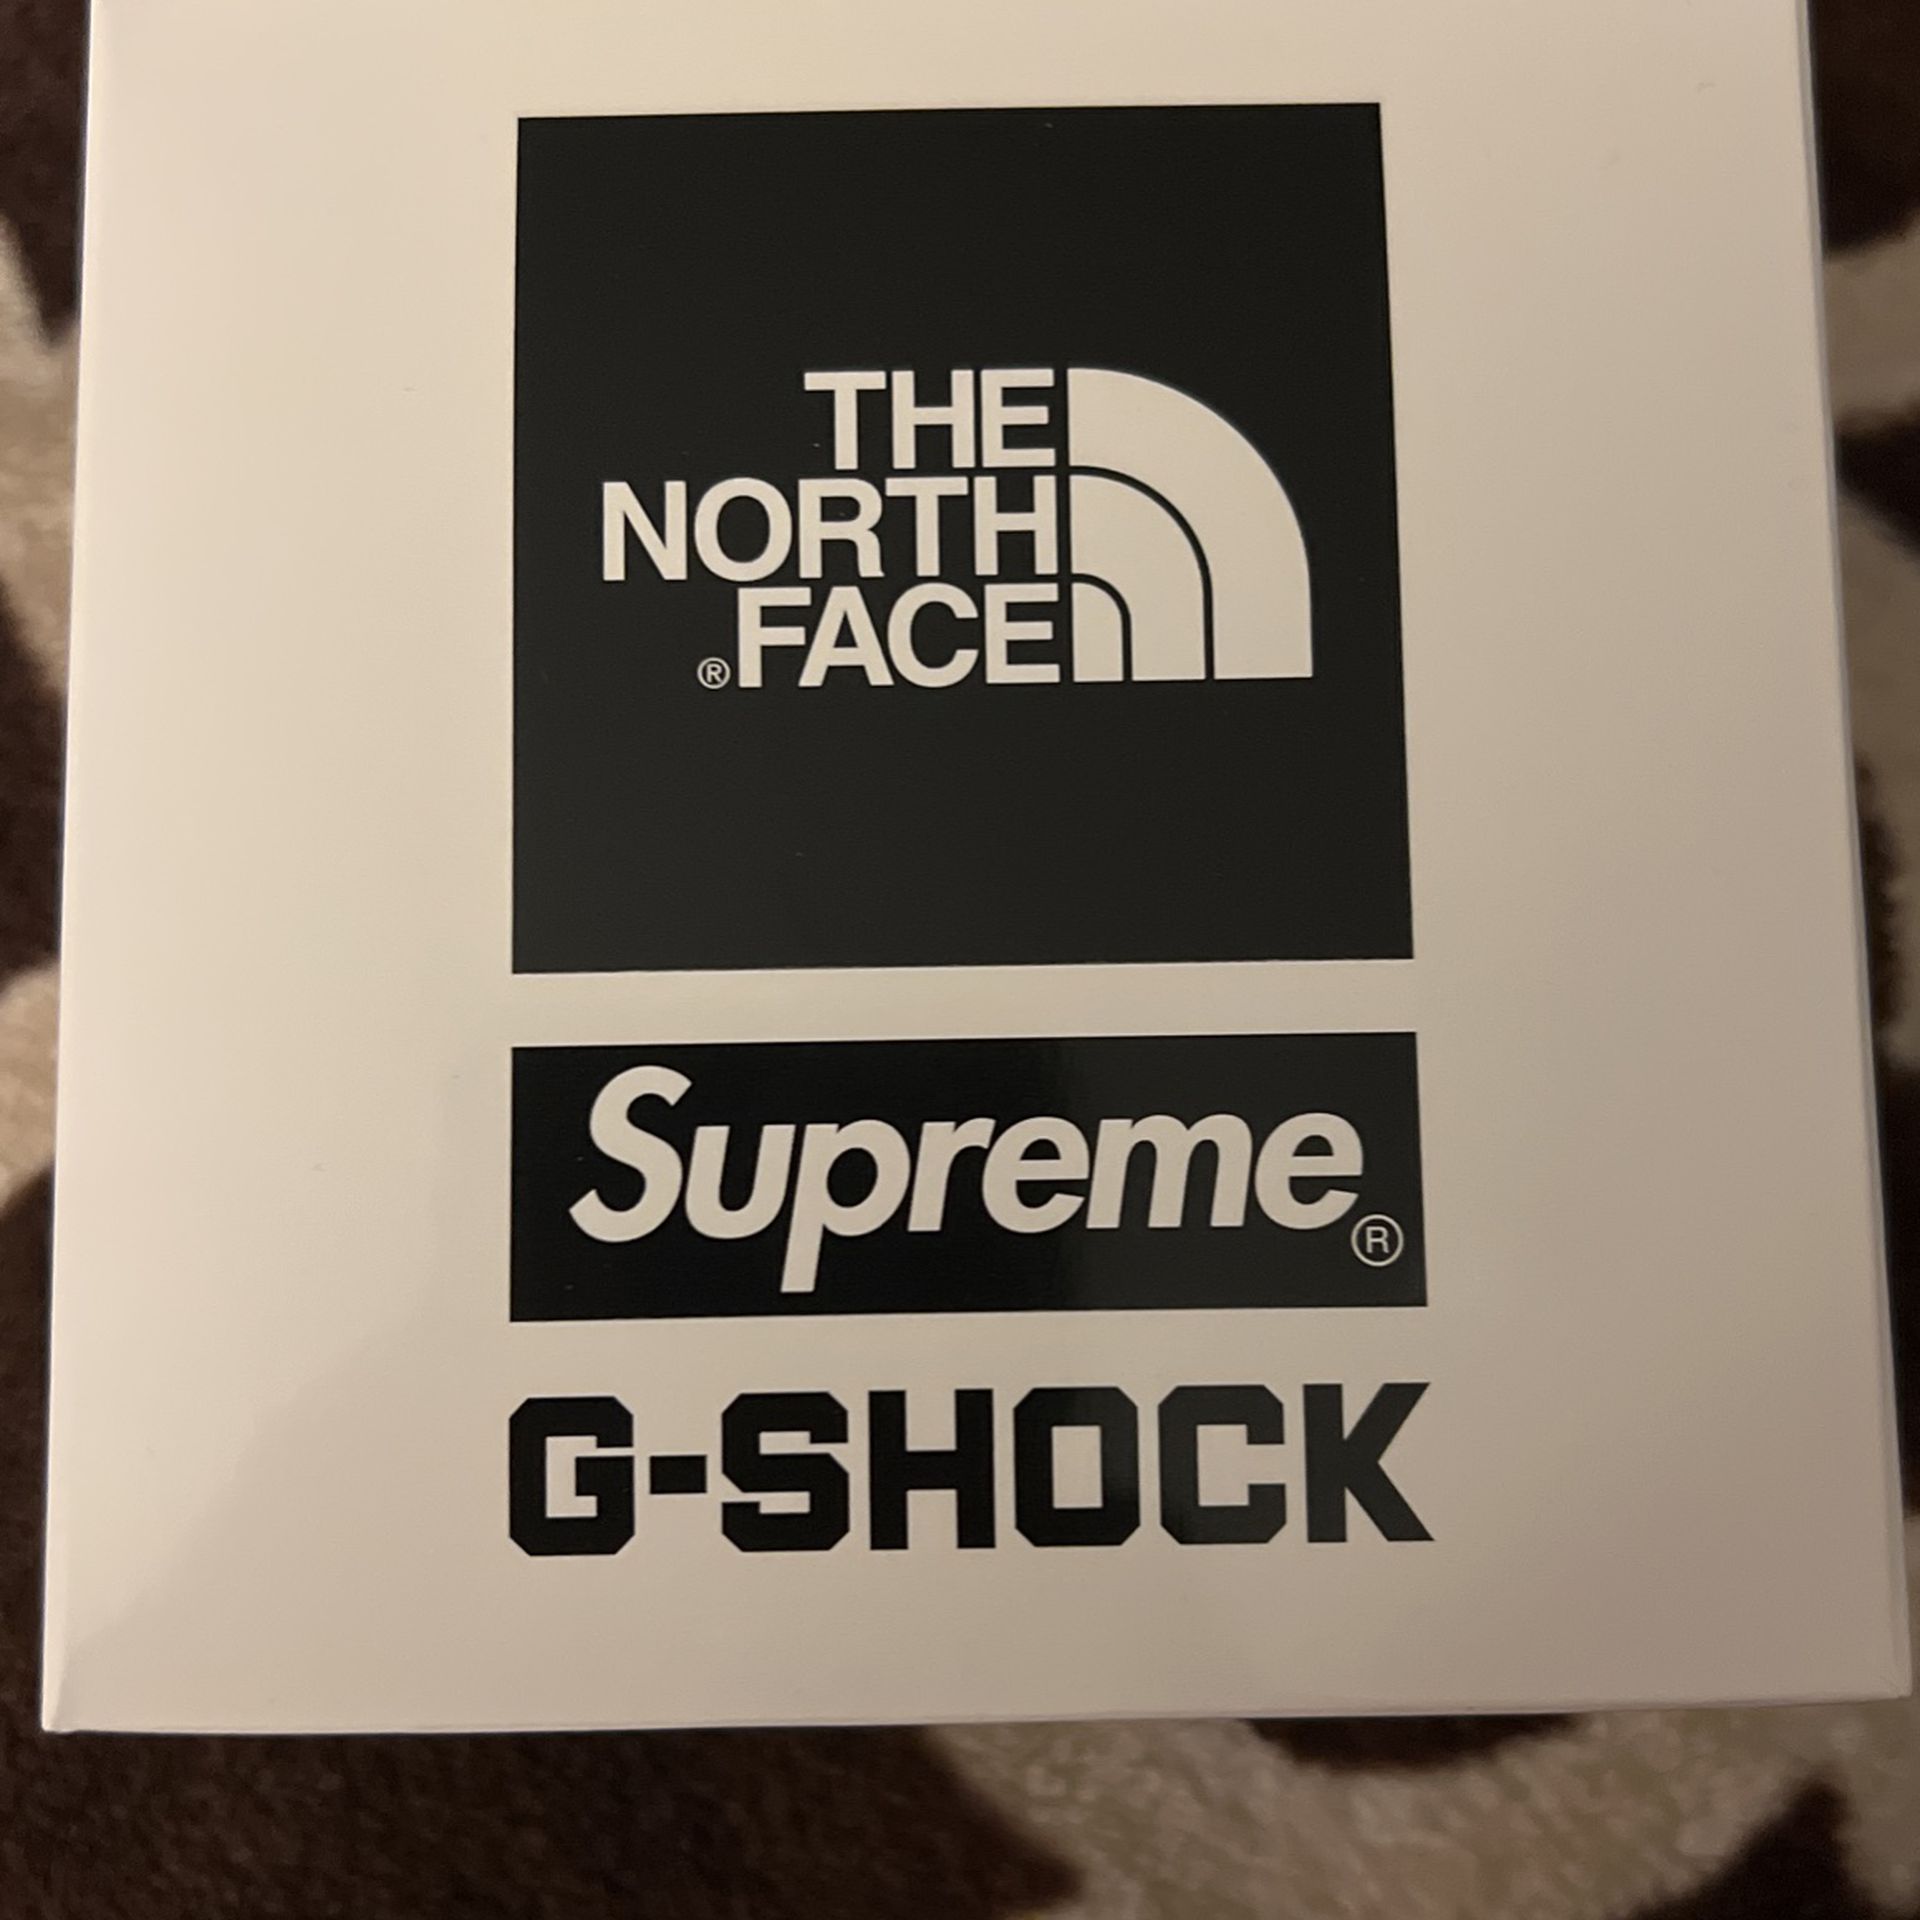 G-Shock/ North face/ Supreme watch  